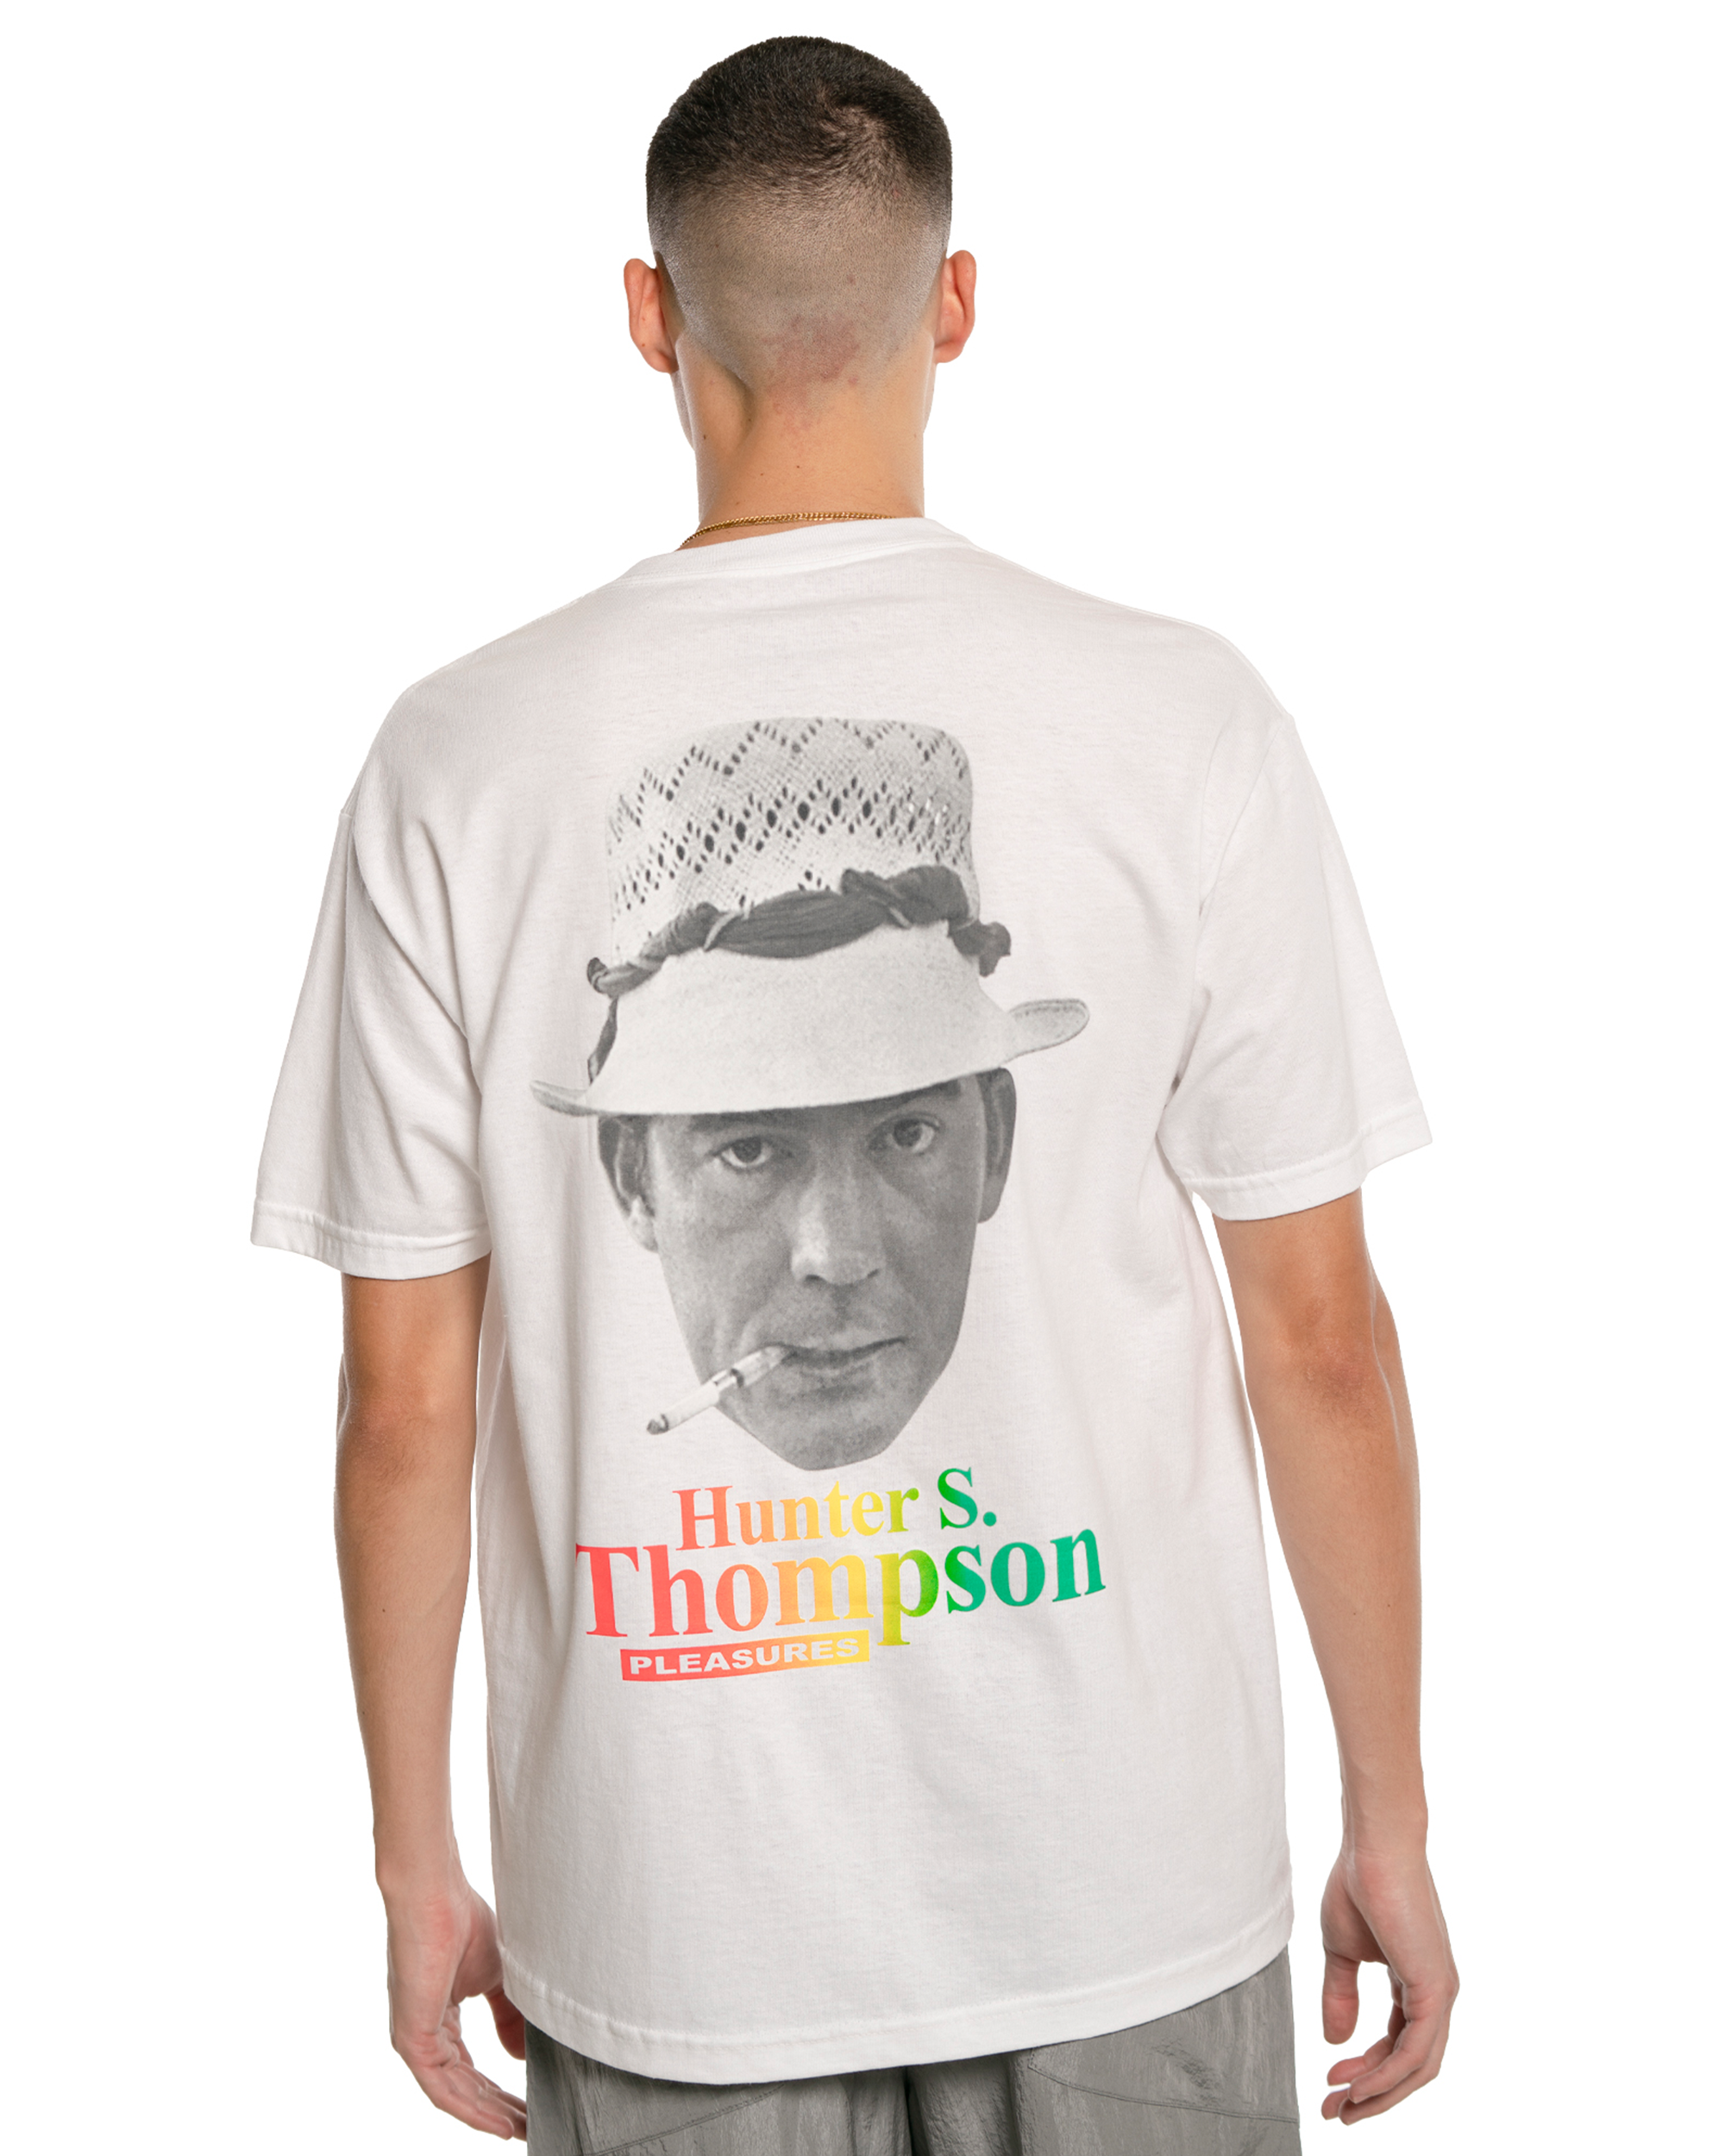 Hunter S. Thompson Take the Ride T-shirt - White